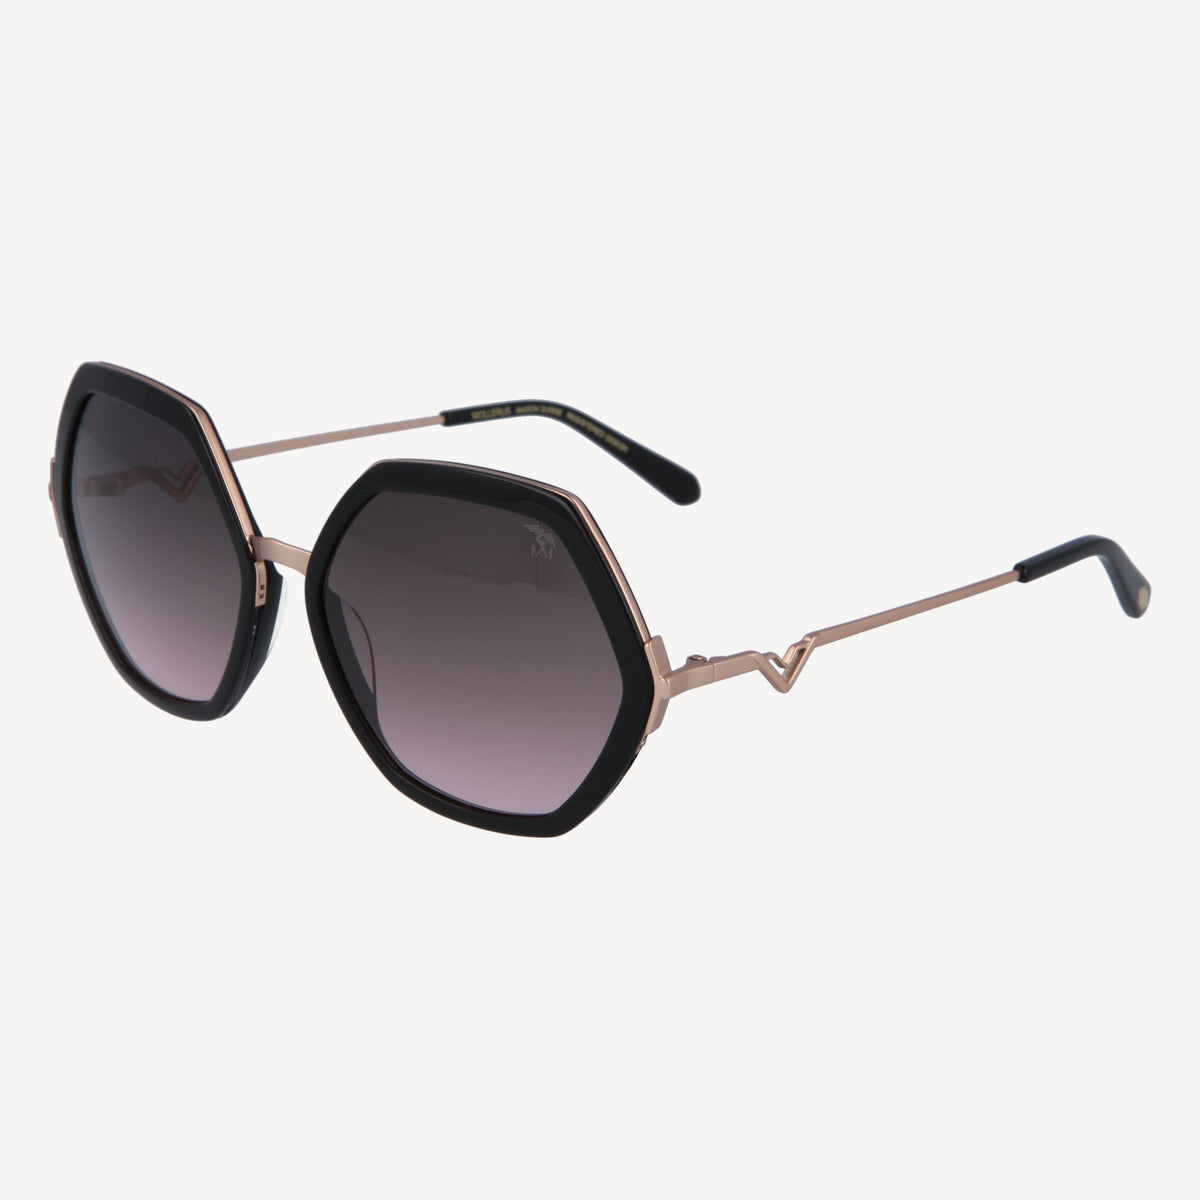 AGNEL | Sonnenbrille classic schwarz/altrosa - seitlich